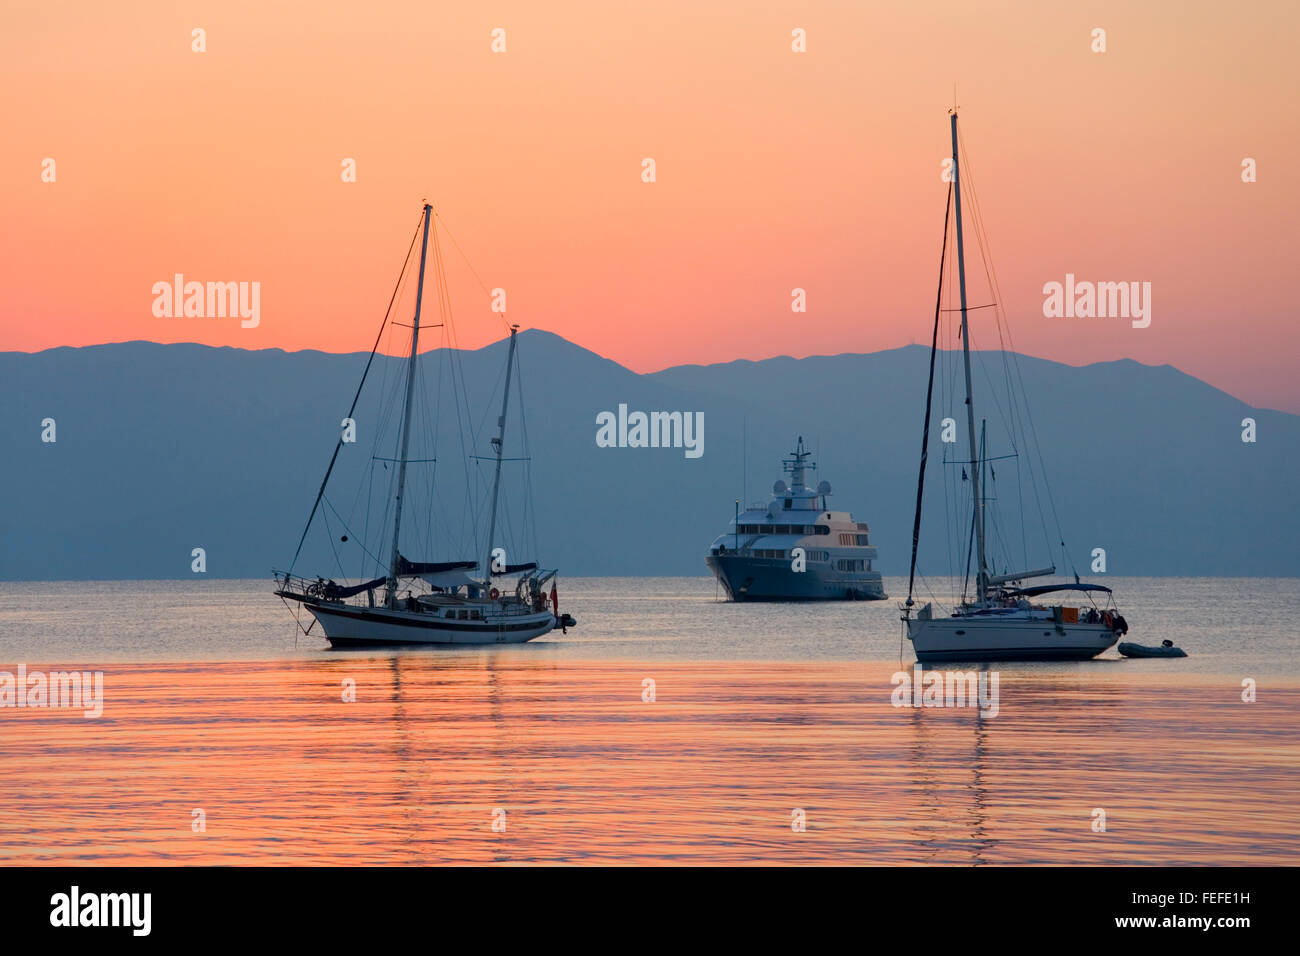 Corfu Town, Corfu, Ionian Islands, Greece. View across the tranquil waters of Garitsa Bay, dawn, yachts at anchor. Stock Photo